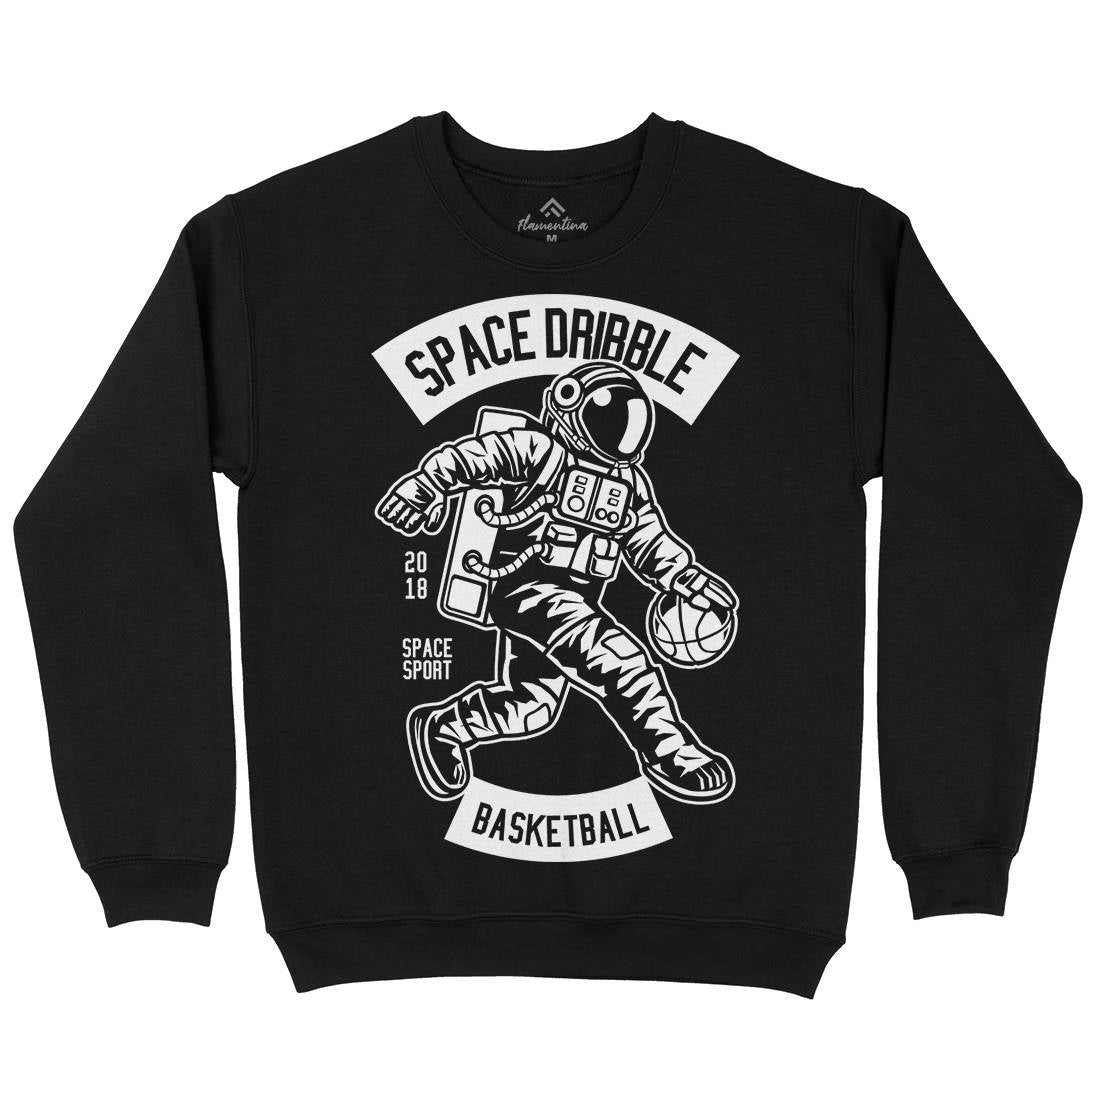 Dribble Kids Crew Neck Sweatshirt Space B635